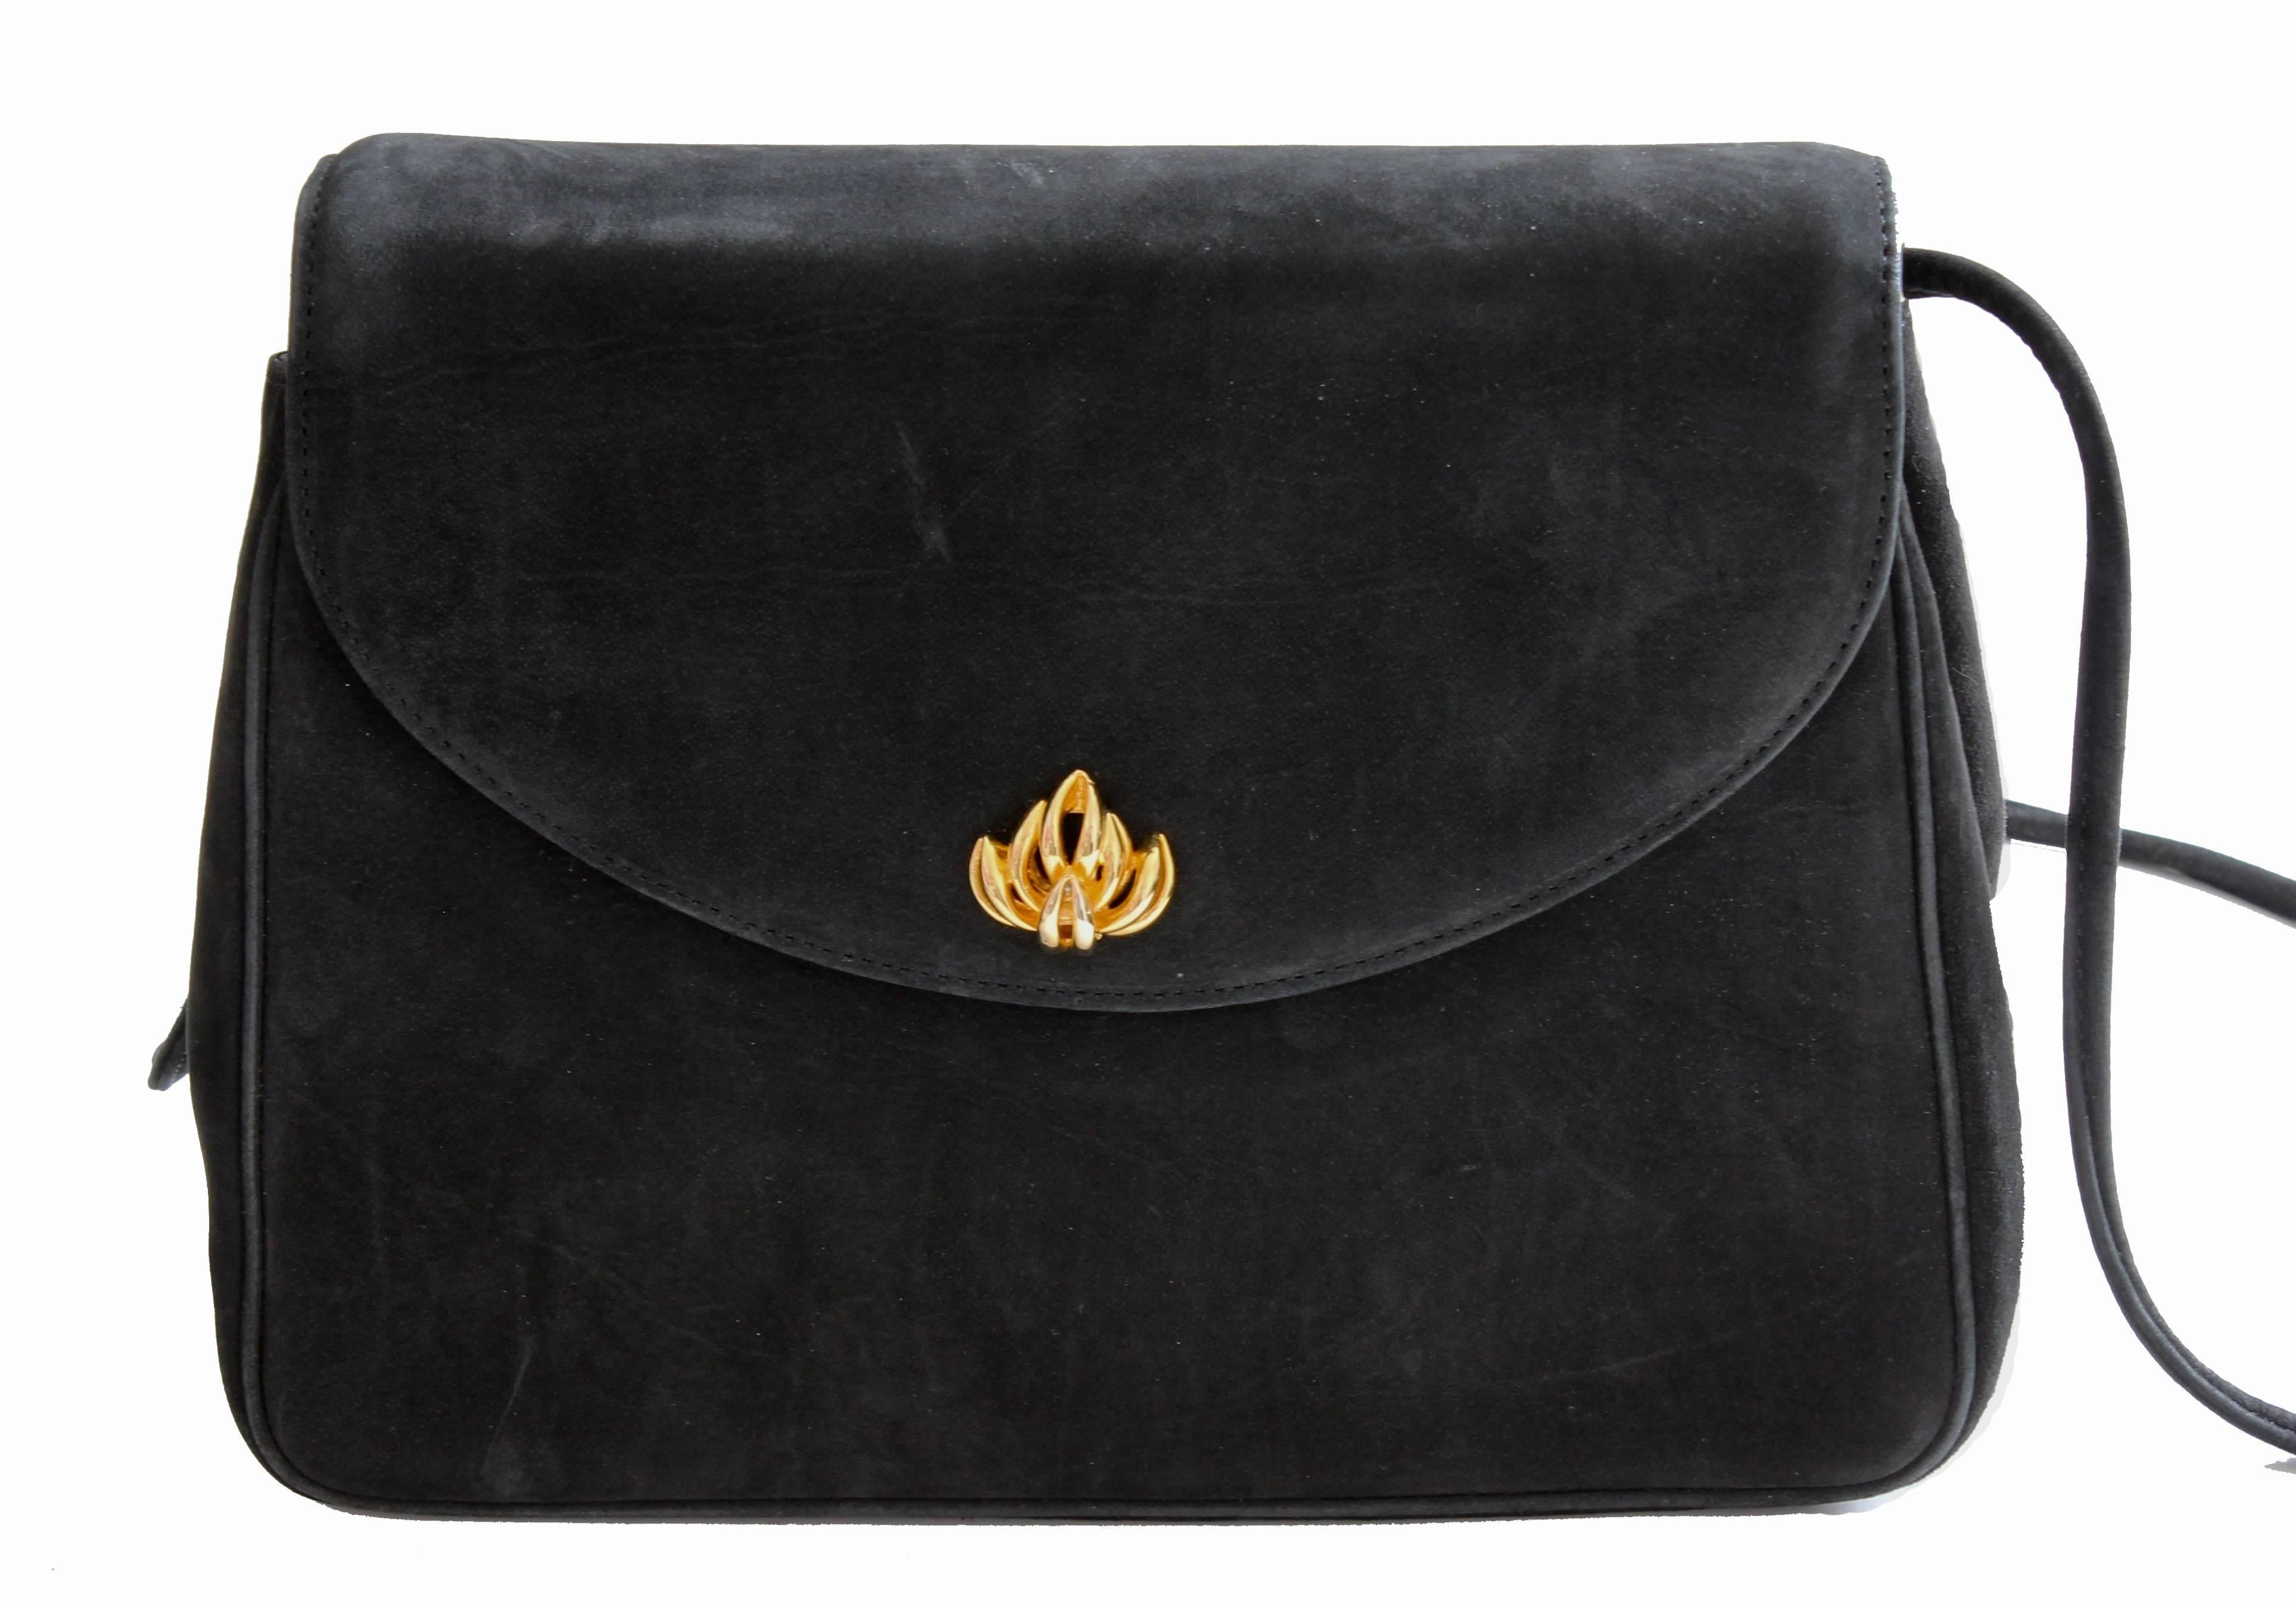 Vintage Asprey London Shoulder Bag Convertible Clutch Black Suede Leather 70s 1